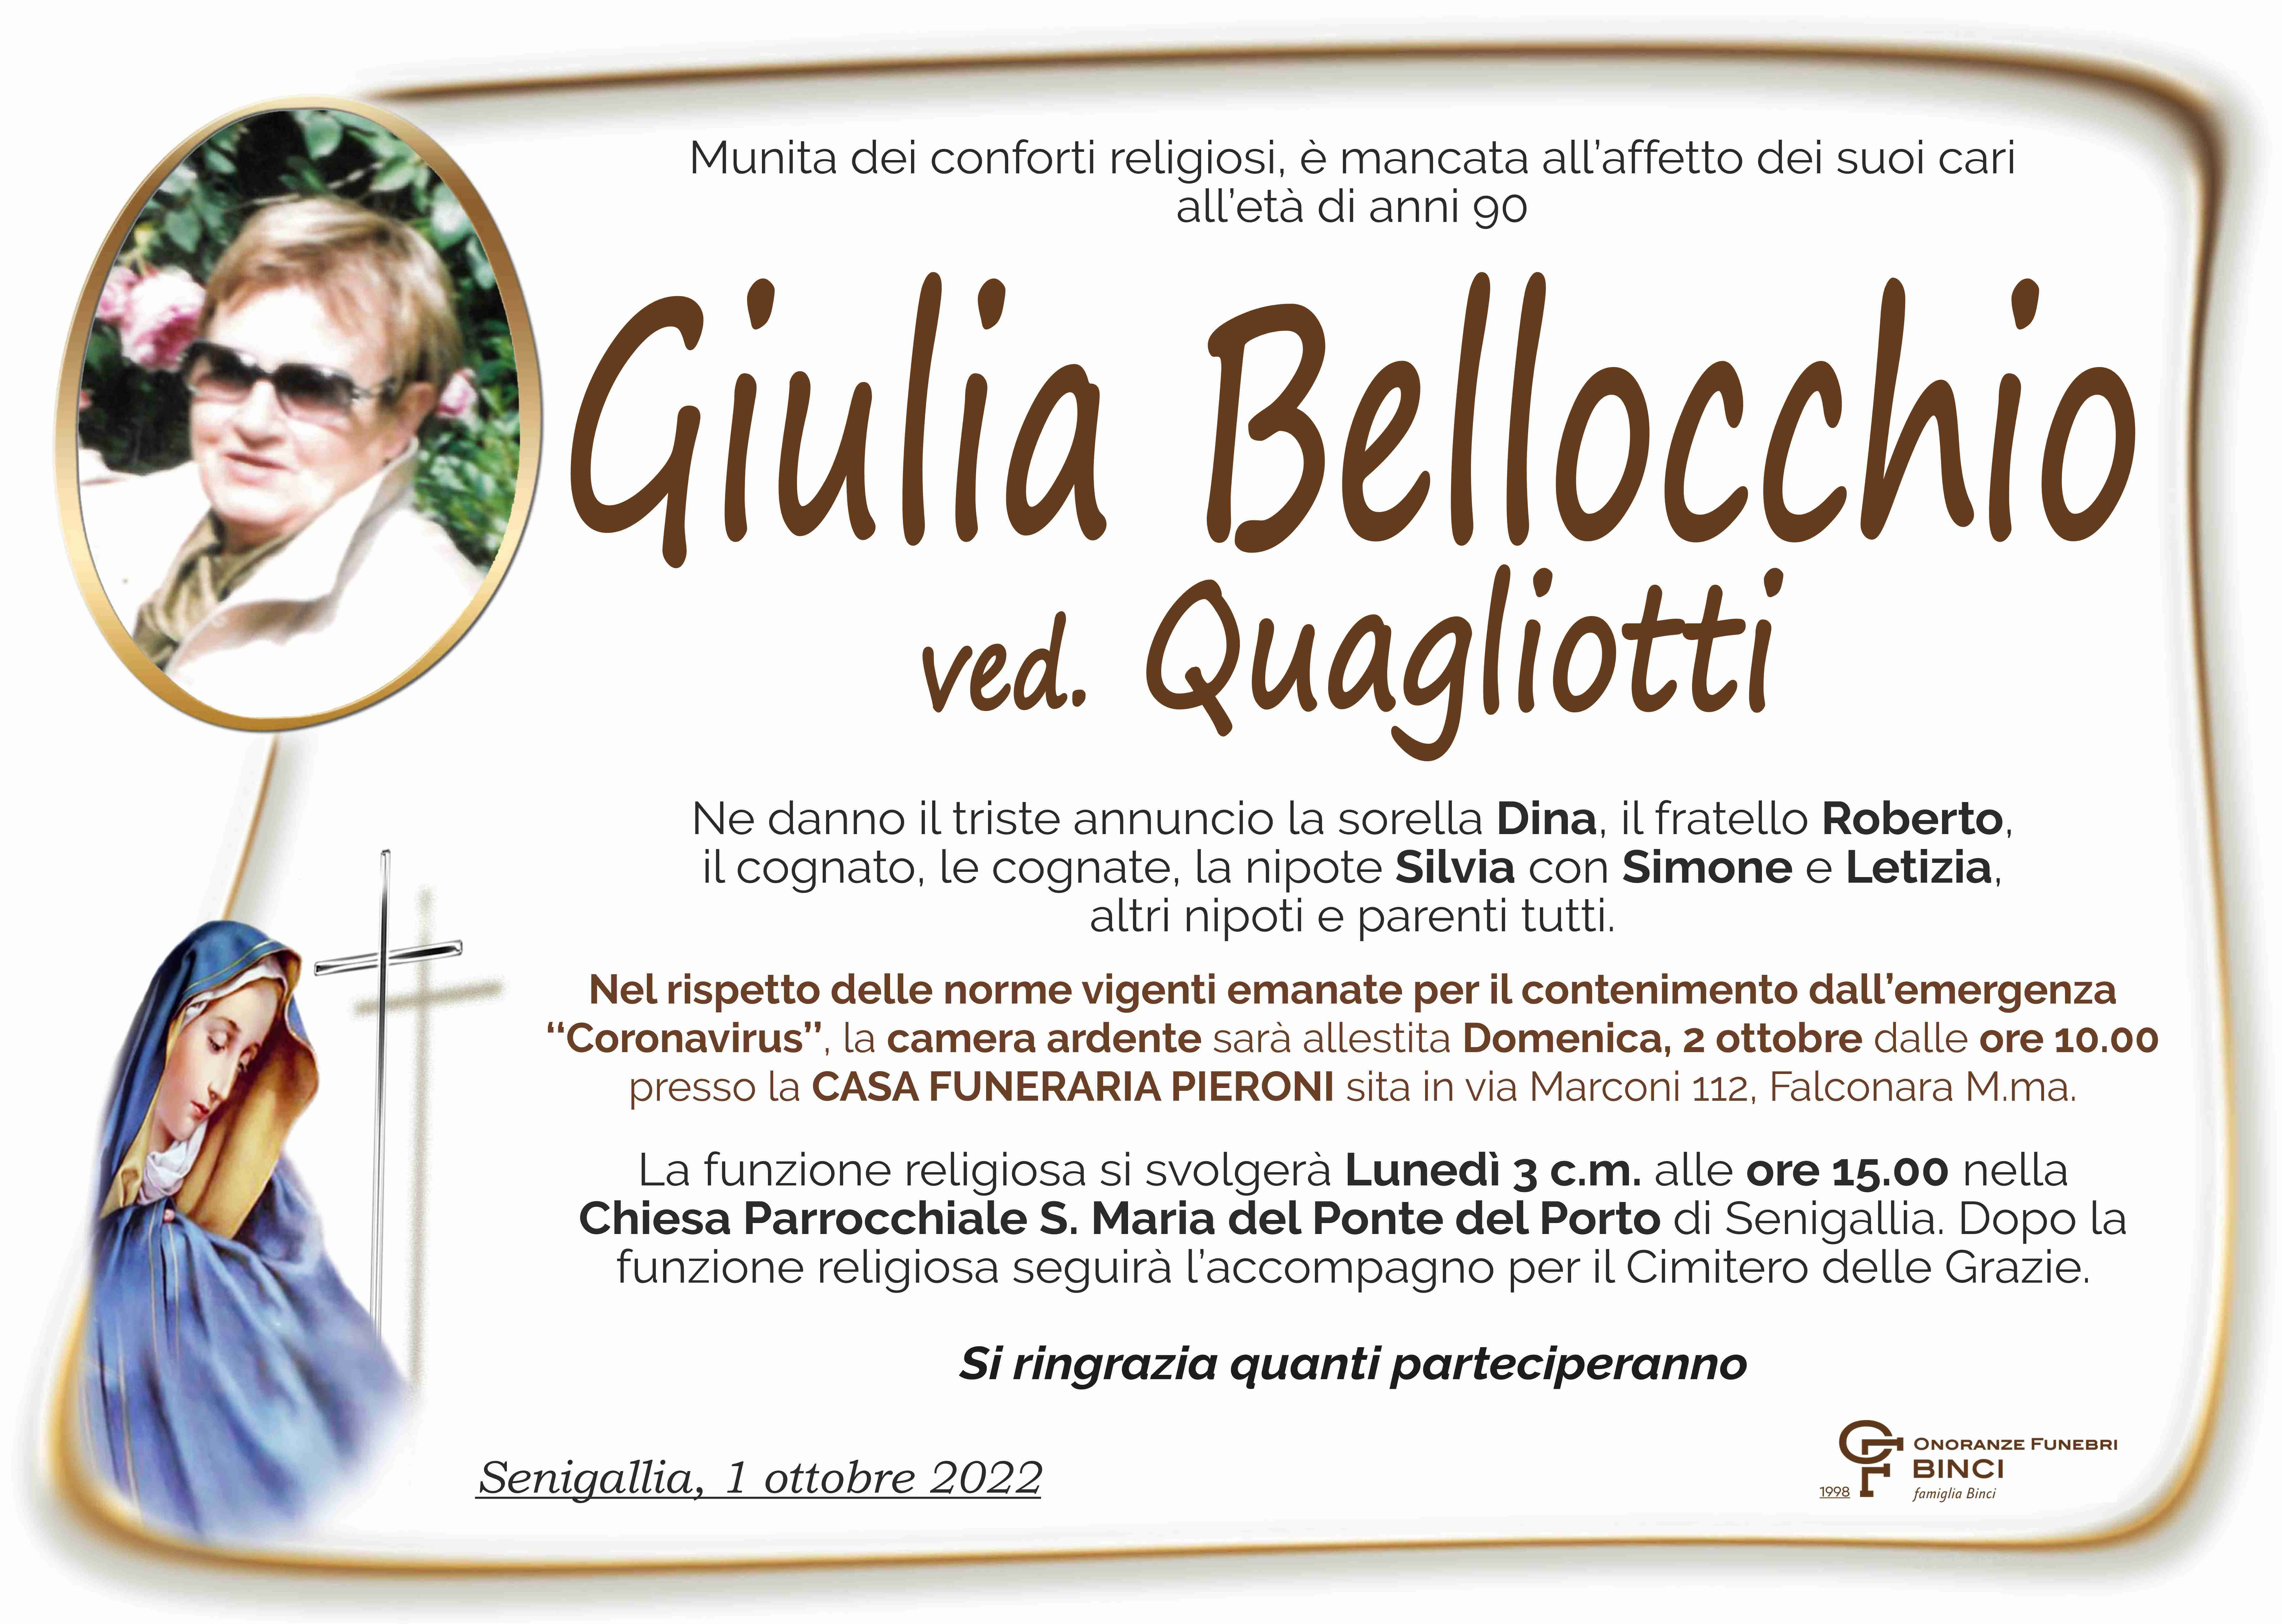 Giulia Bellocchio